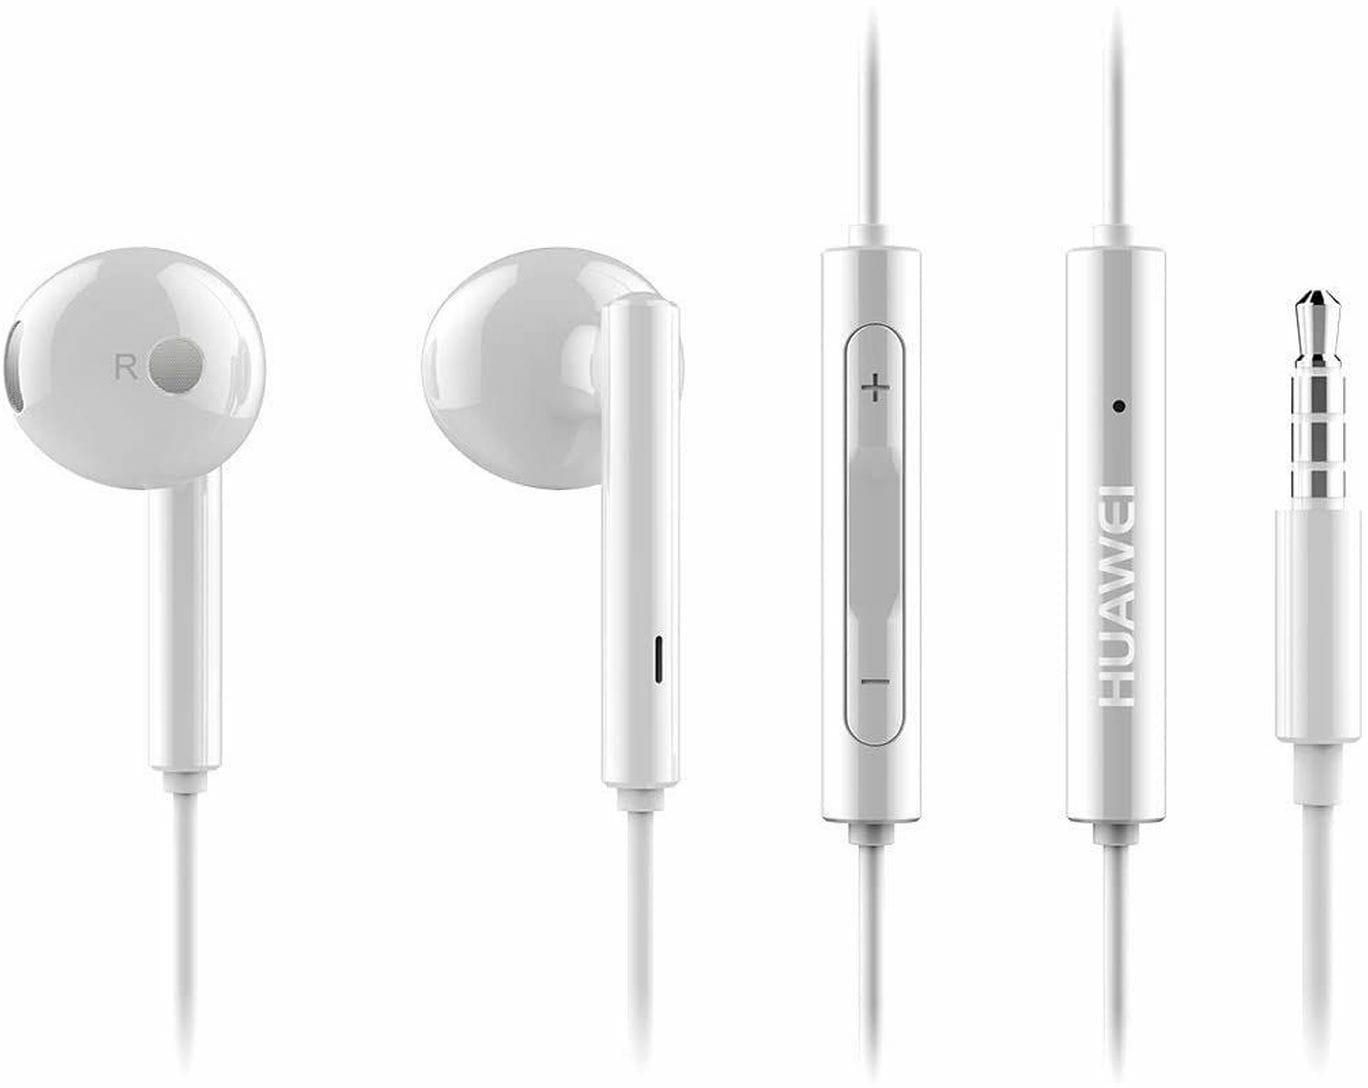 Huawei AM115 Wired Stereo Headphone White